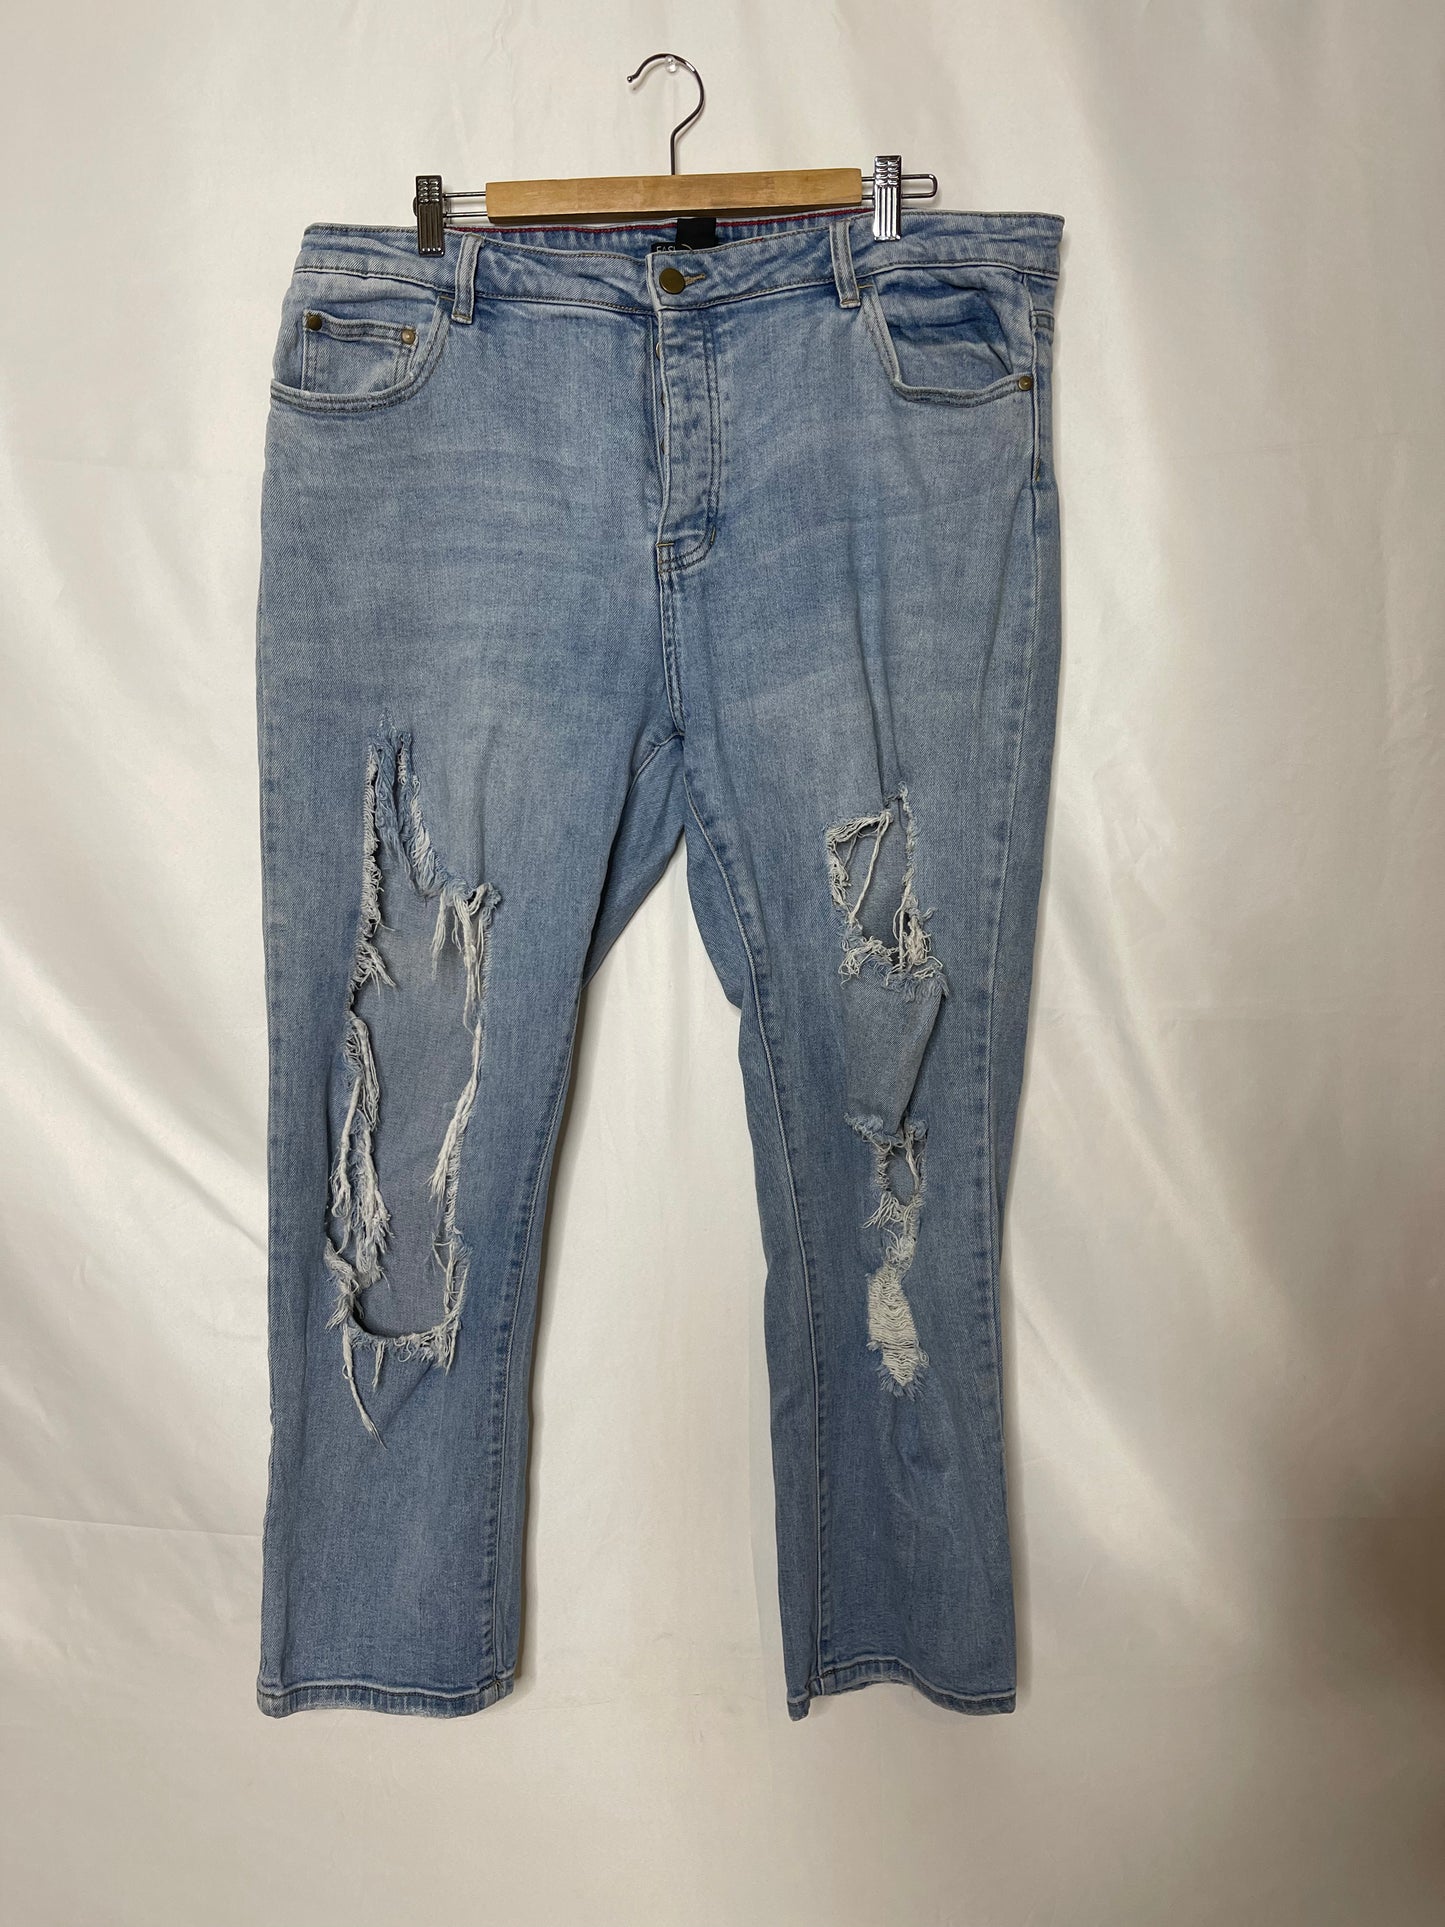 18 Fashion Nova "light distressed jeans"